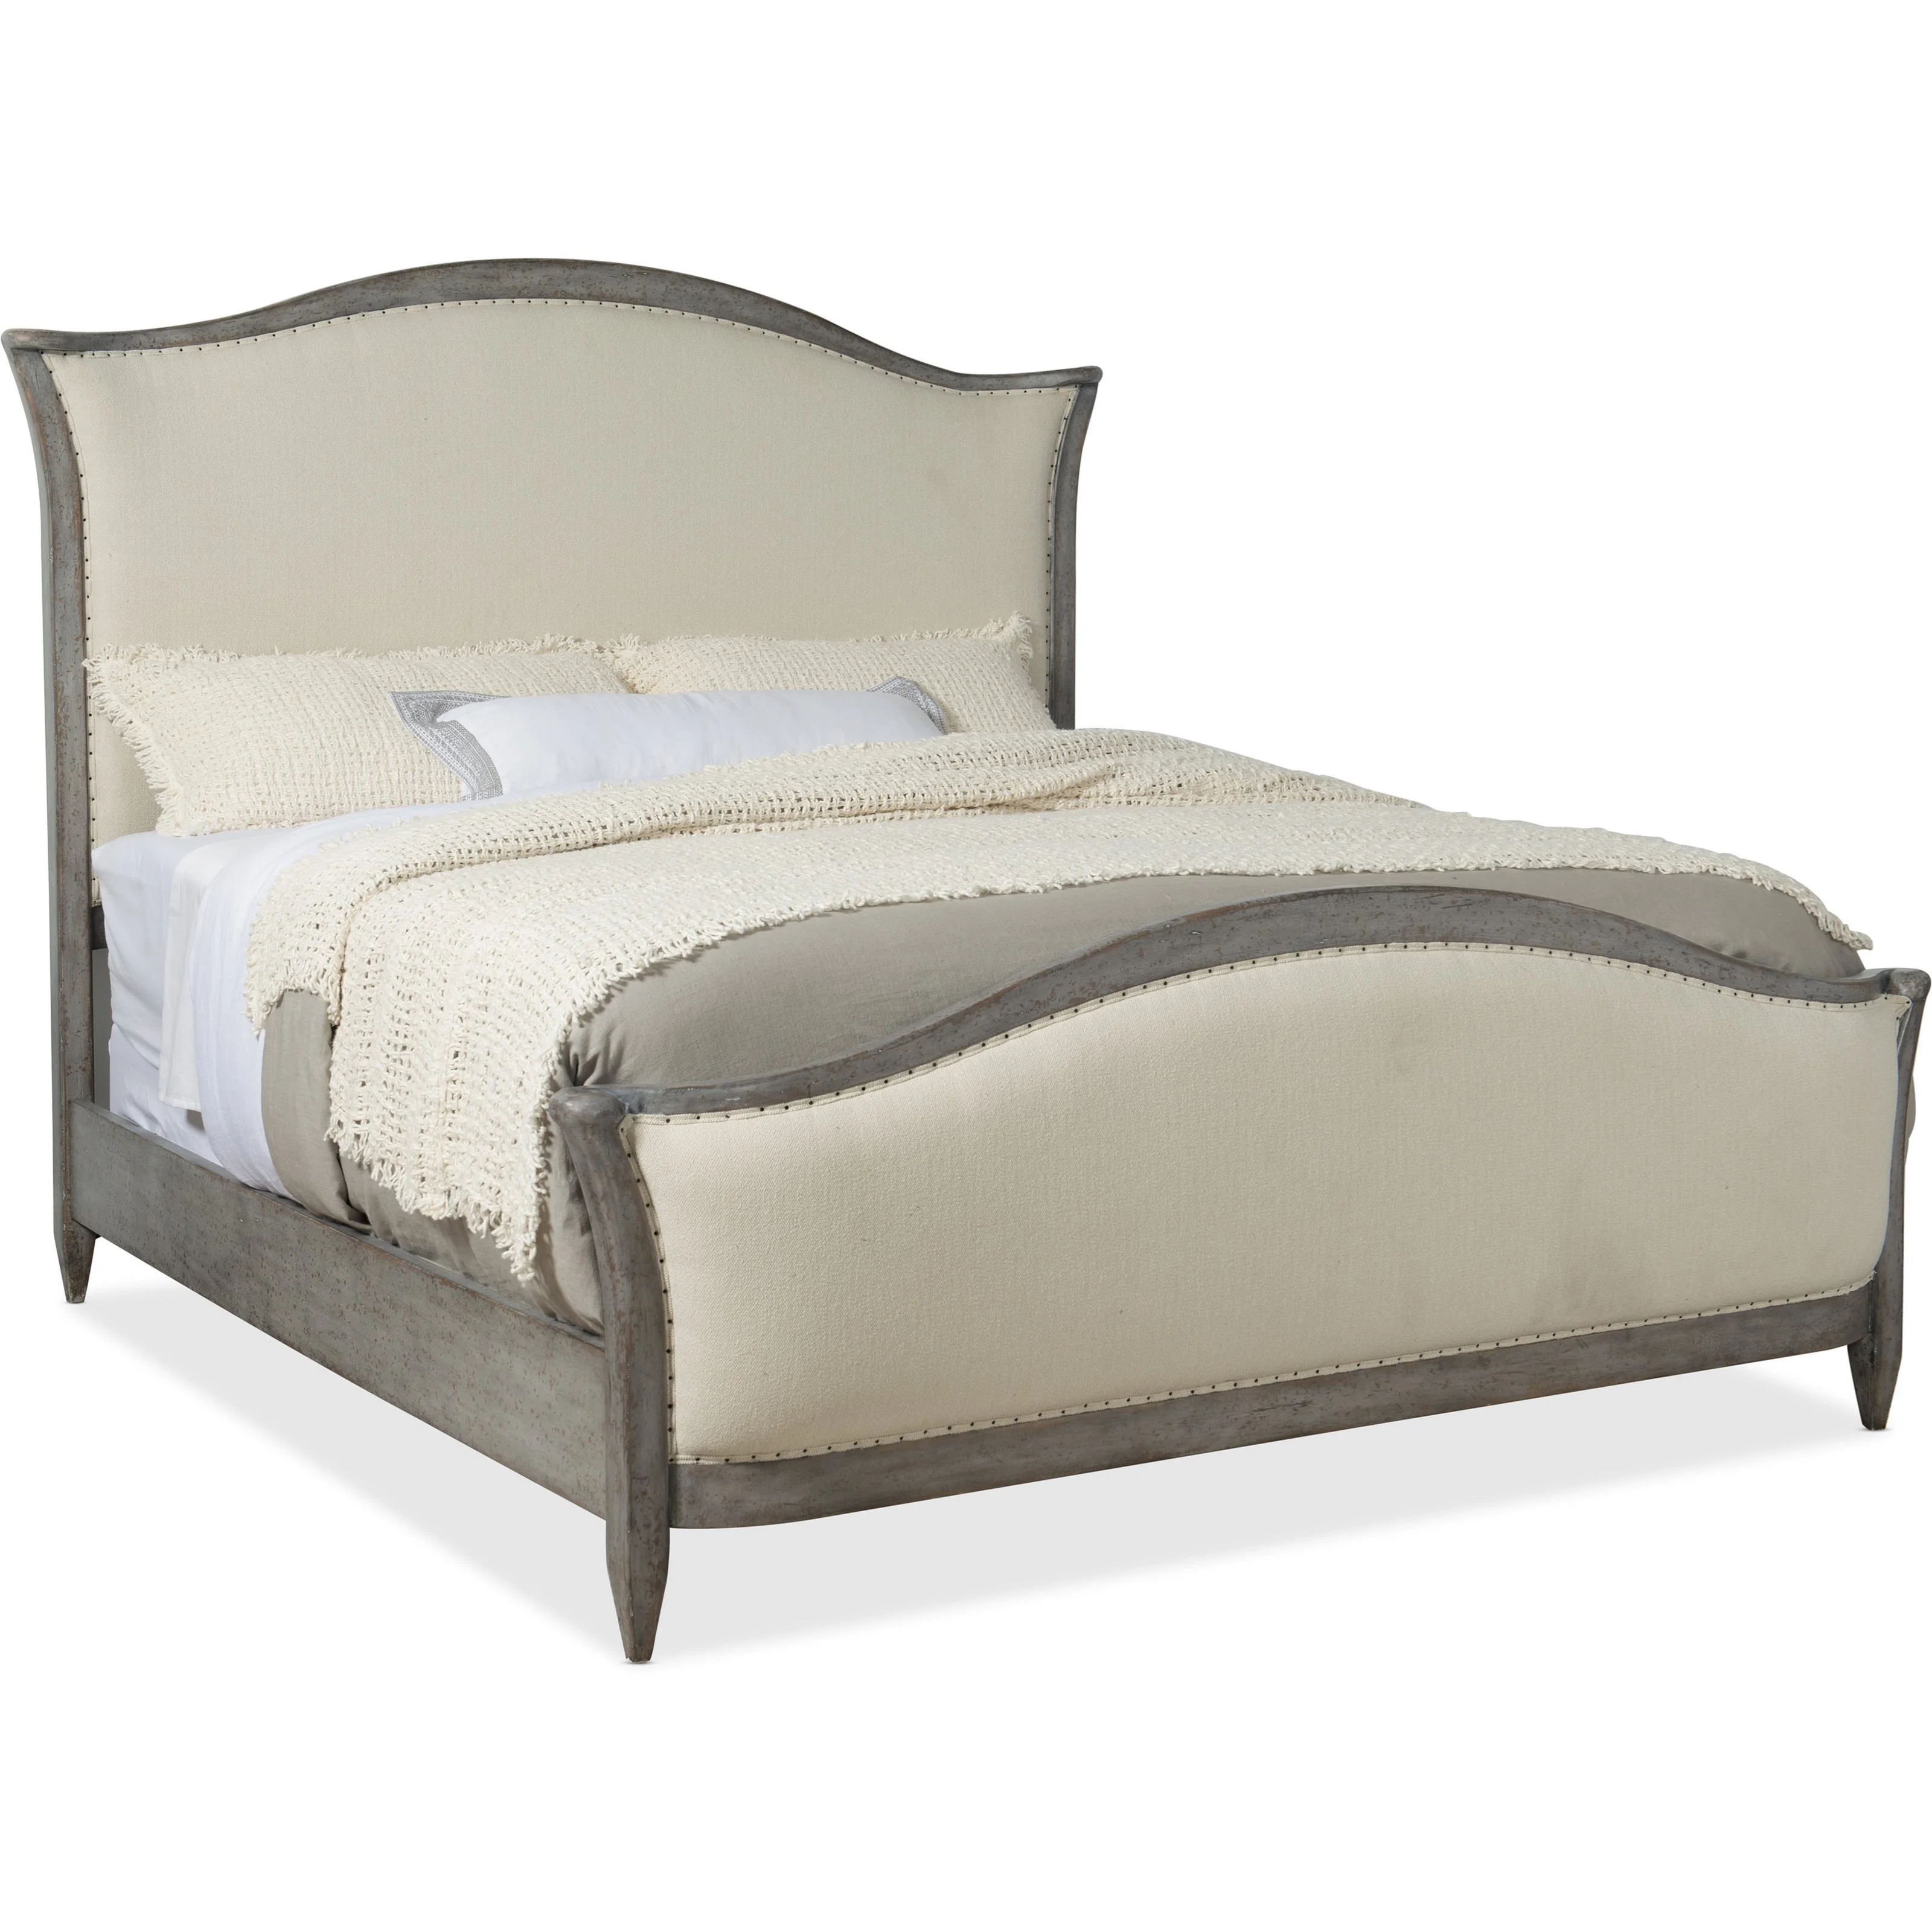 Hooker Furniture Ciao Bella 5805-90850-96 Rustic Queen Upholstered